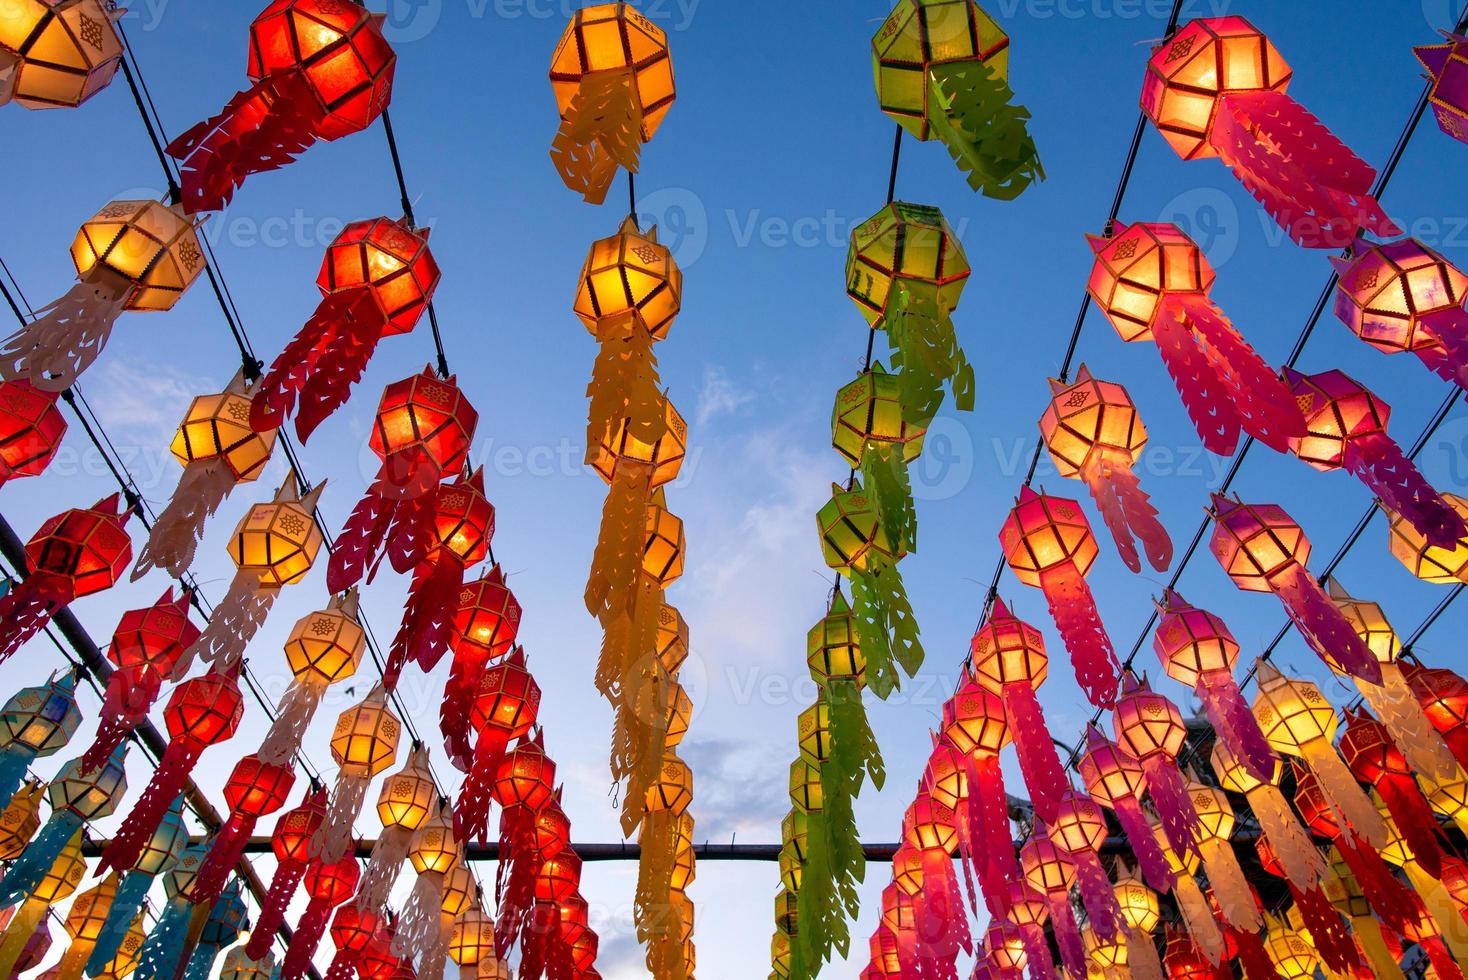 bellissime lanterne colorate nel festival delle lanterne di yee peng a wat phra that hariphunchai a lamphun, thailandia. foto